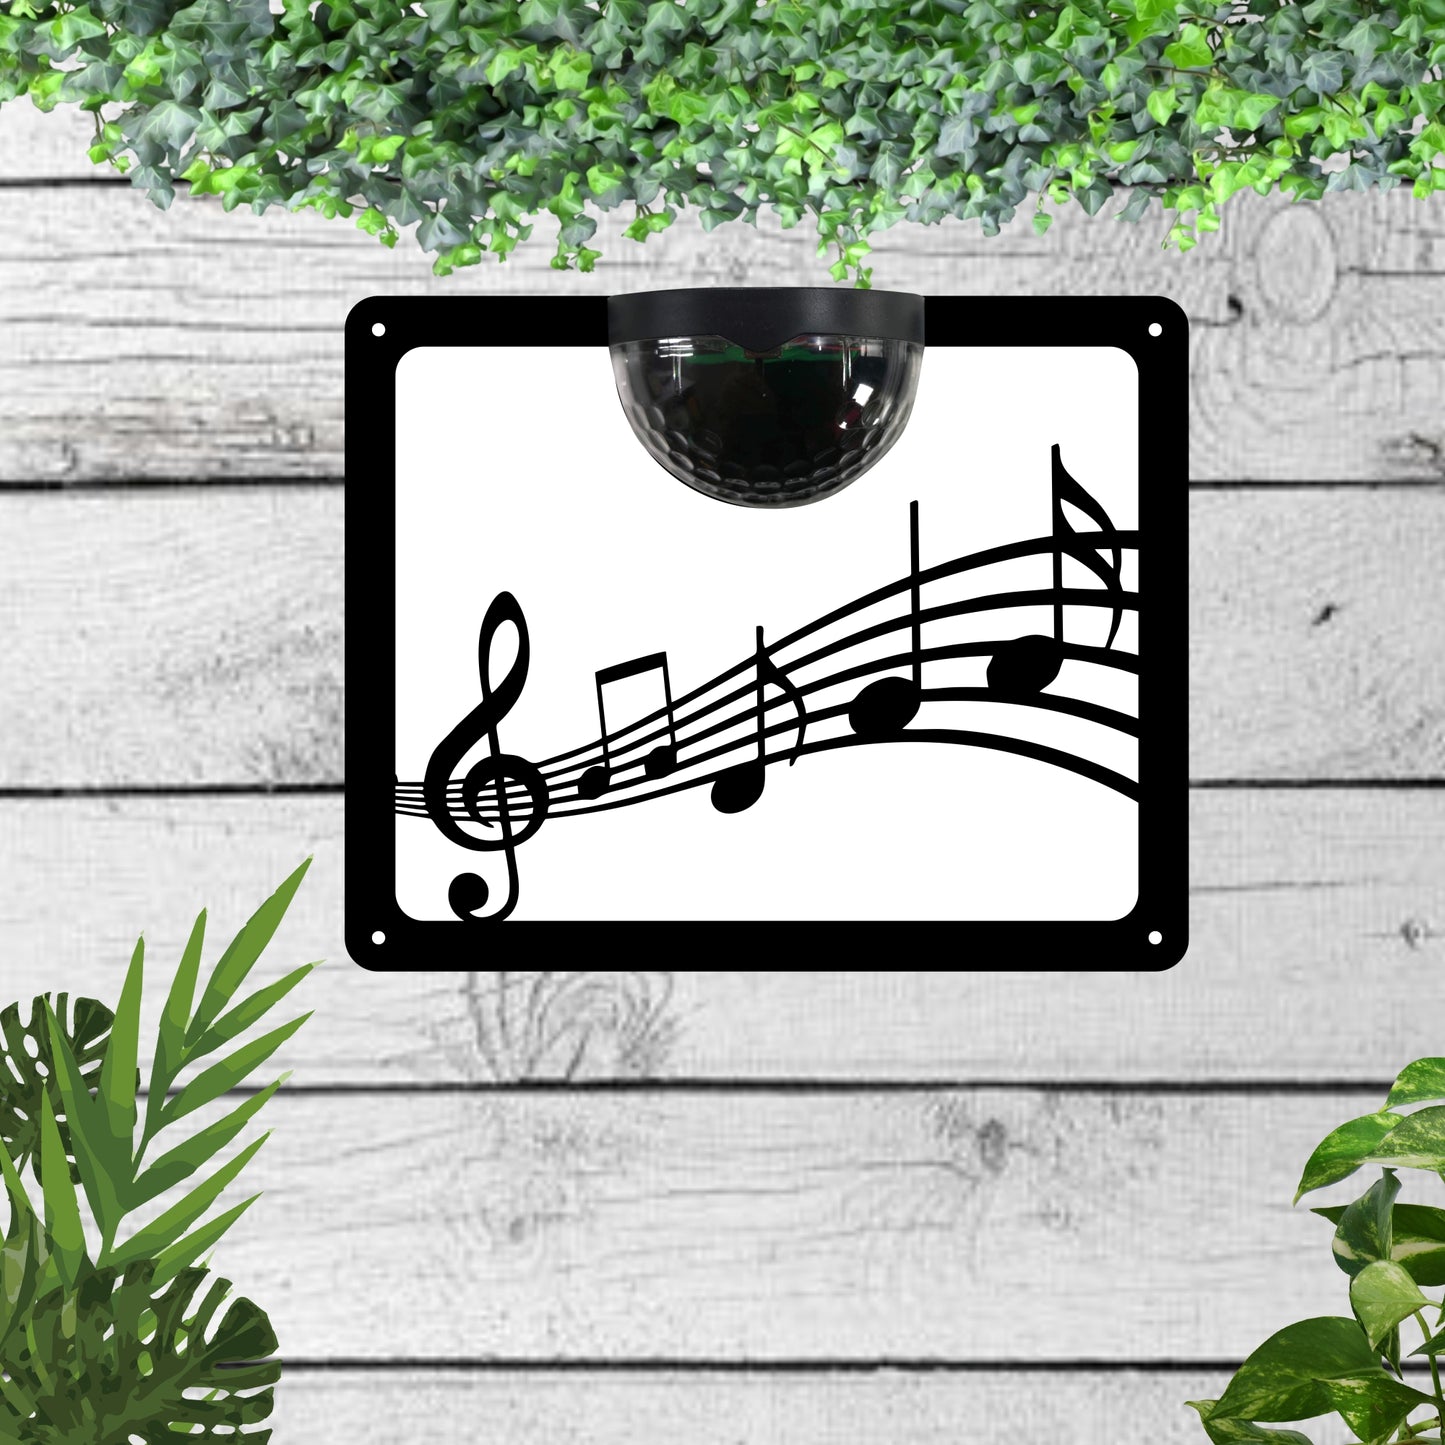 Garden Solar Light Wall Plaque featuring Music Notes | John Alans